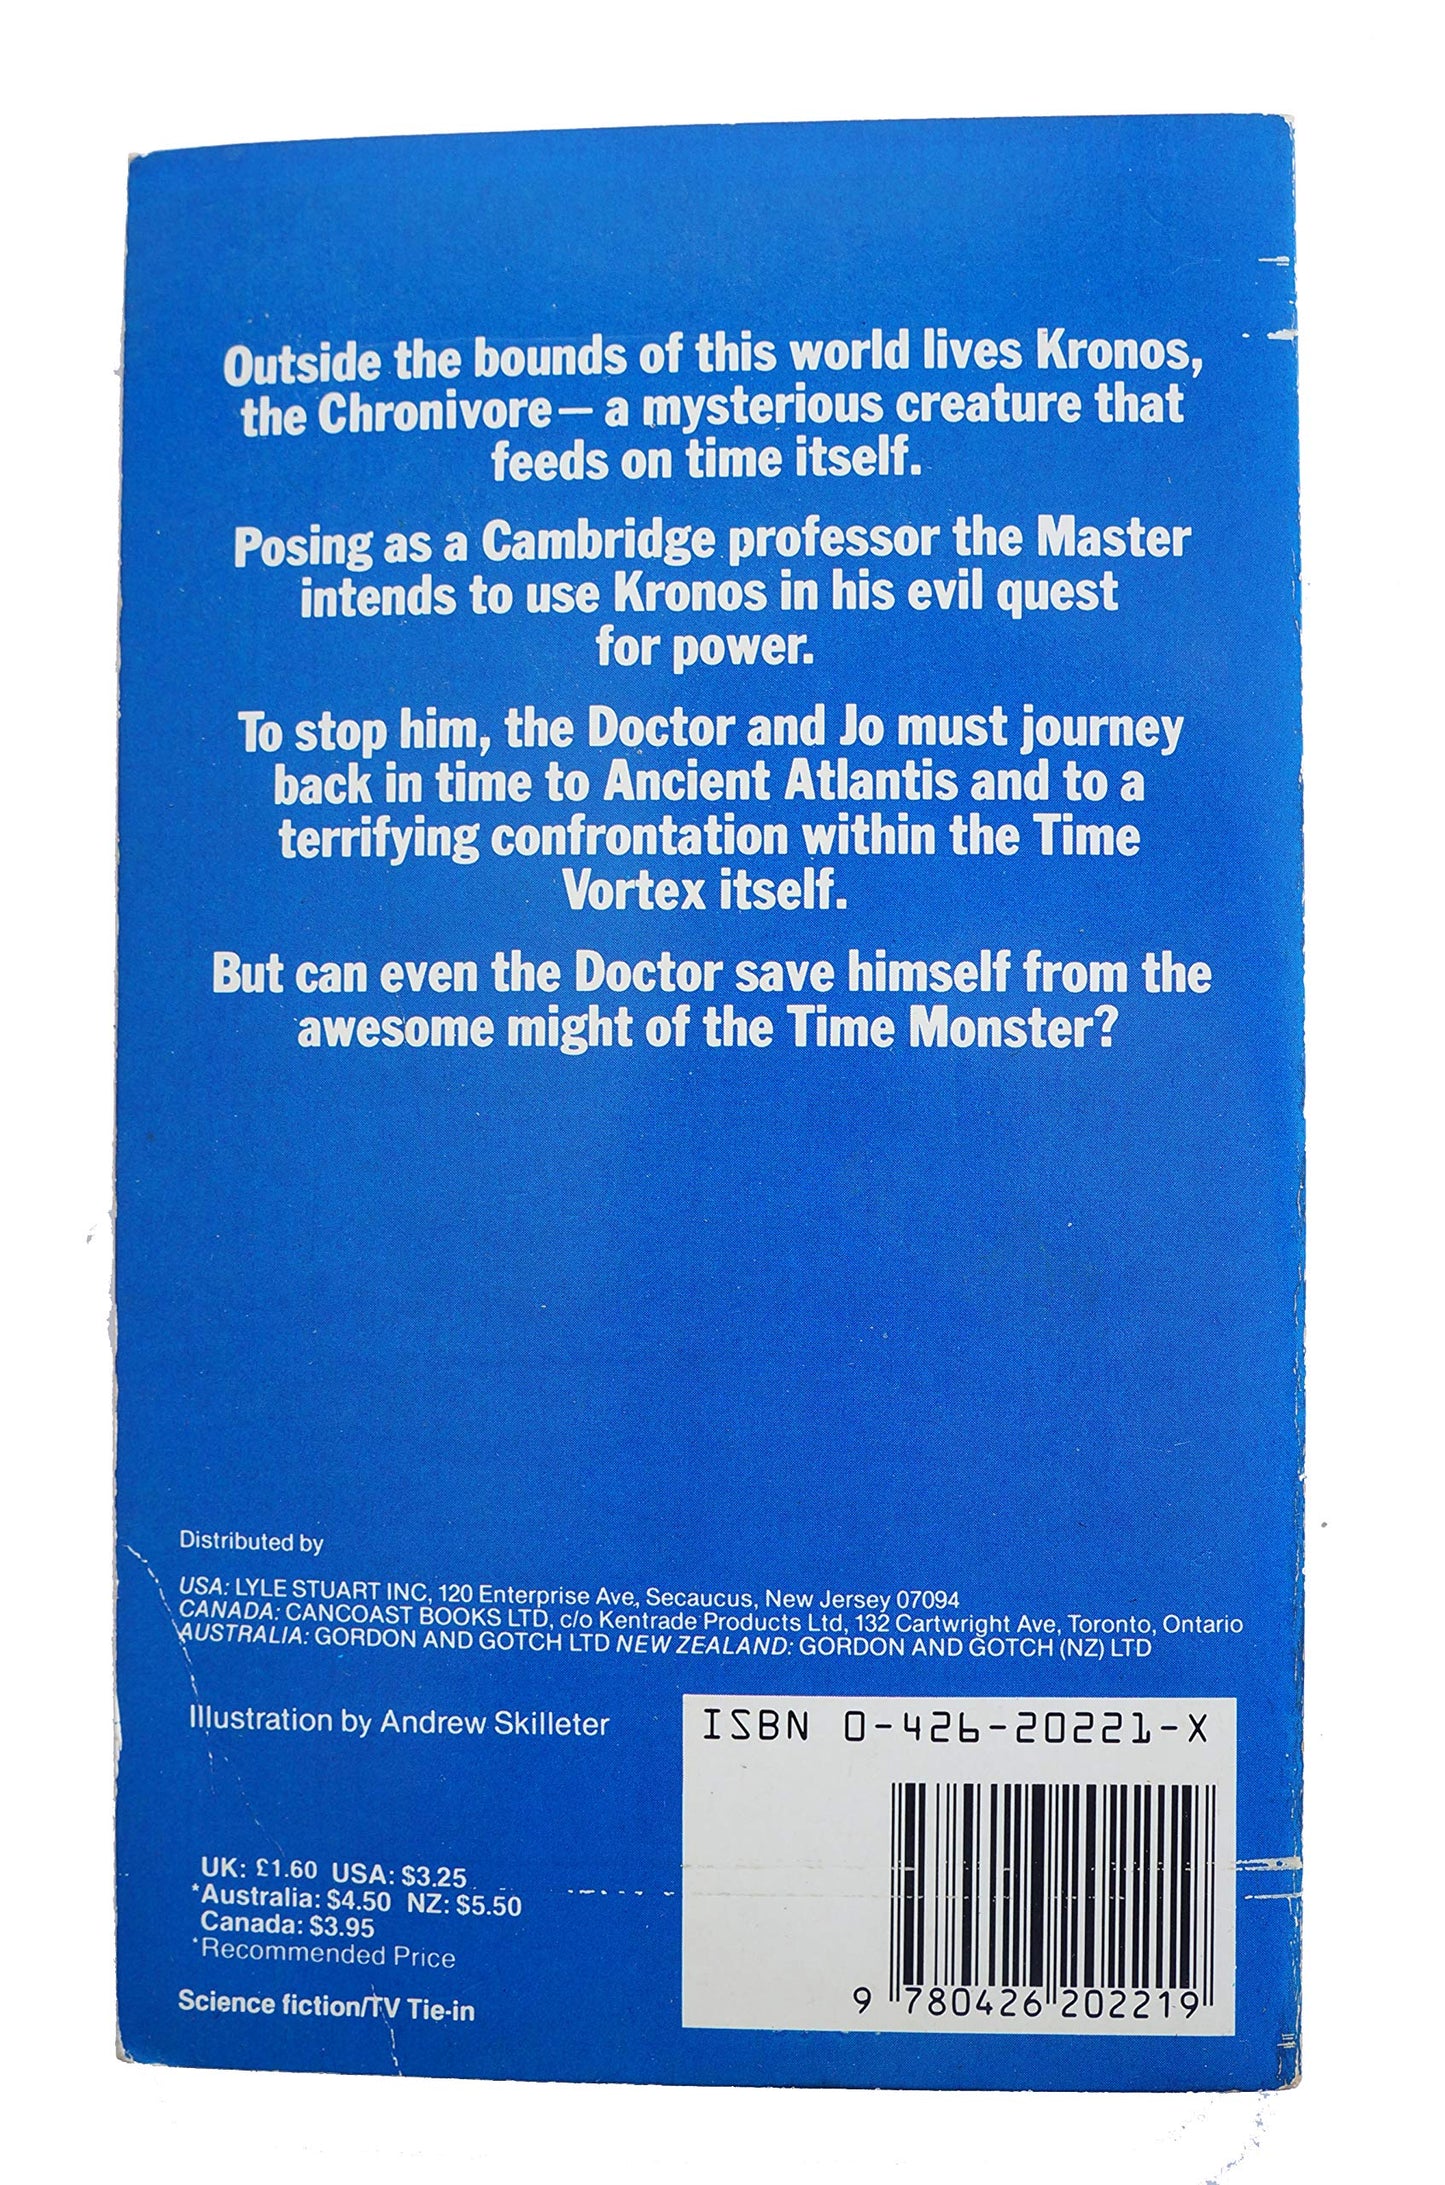 Doctor Who The Time Monster Target Paperback Novel 1985 By Terrance Dicks